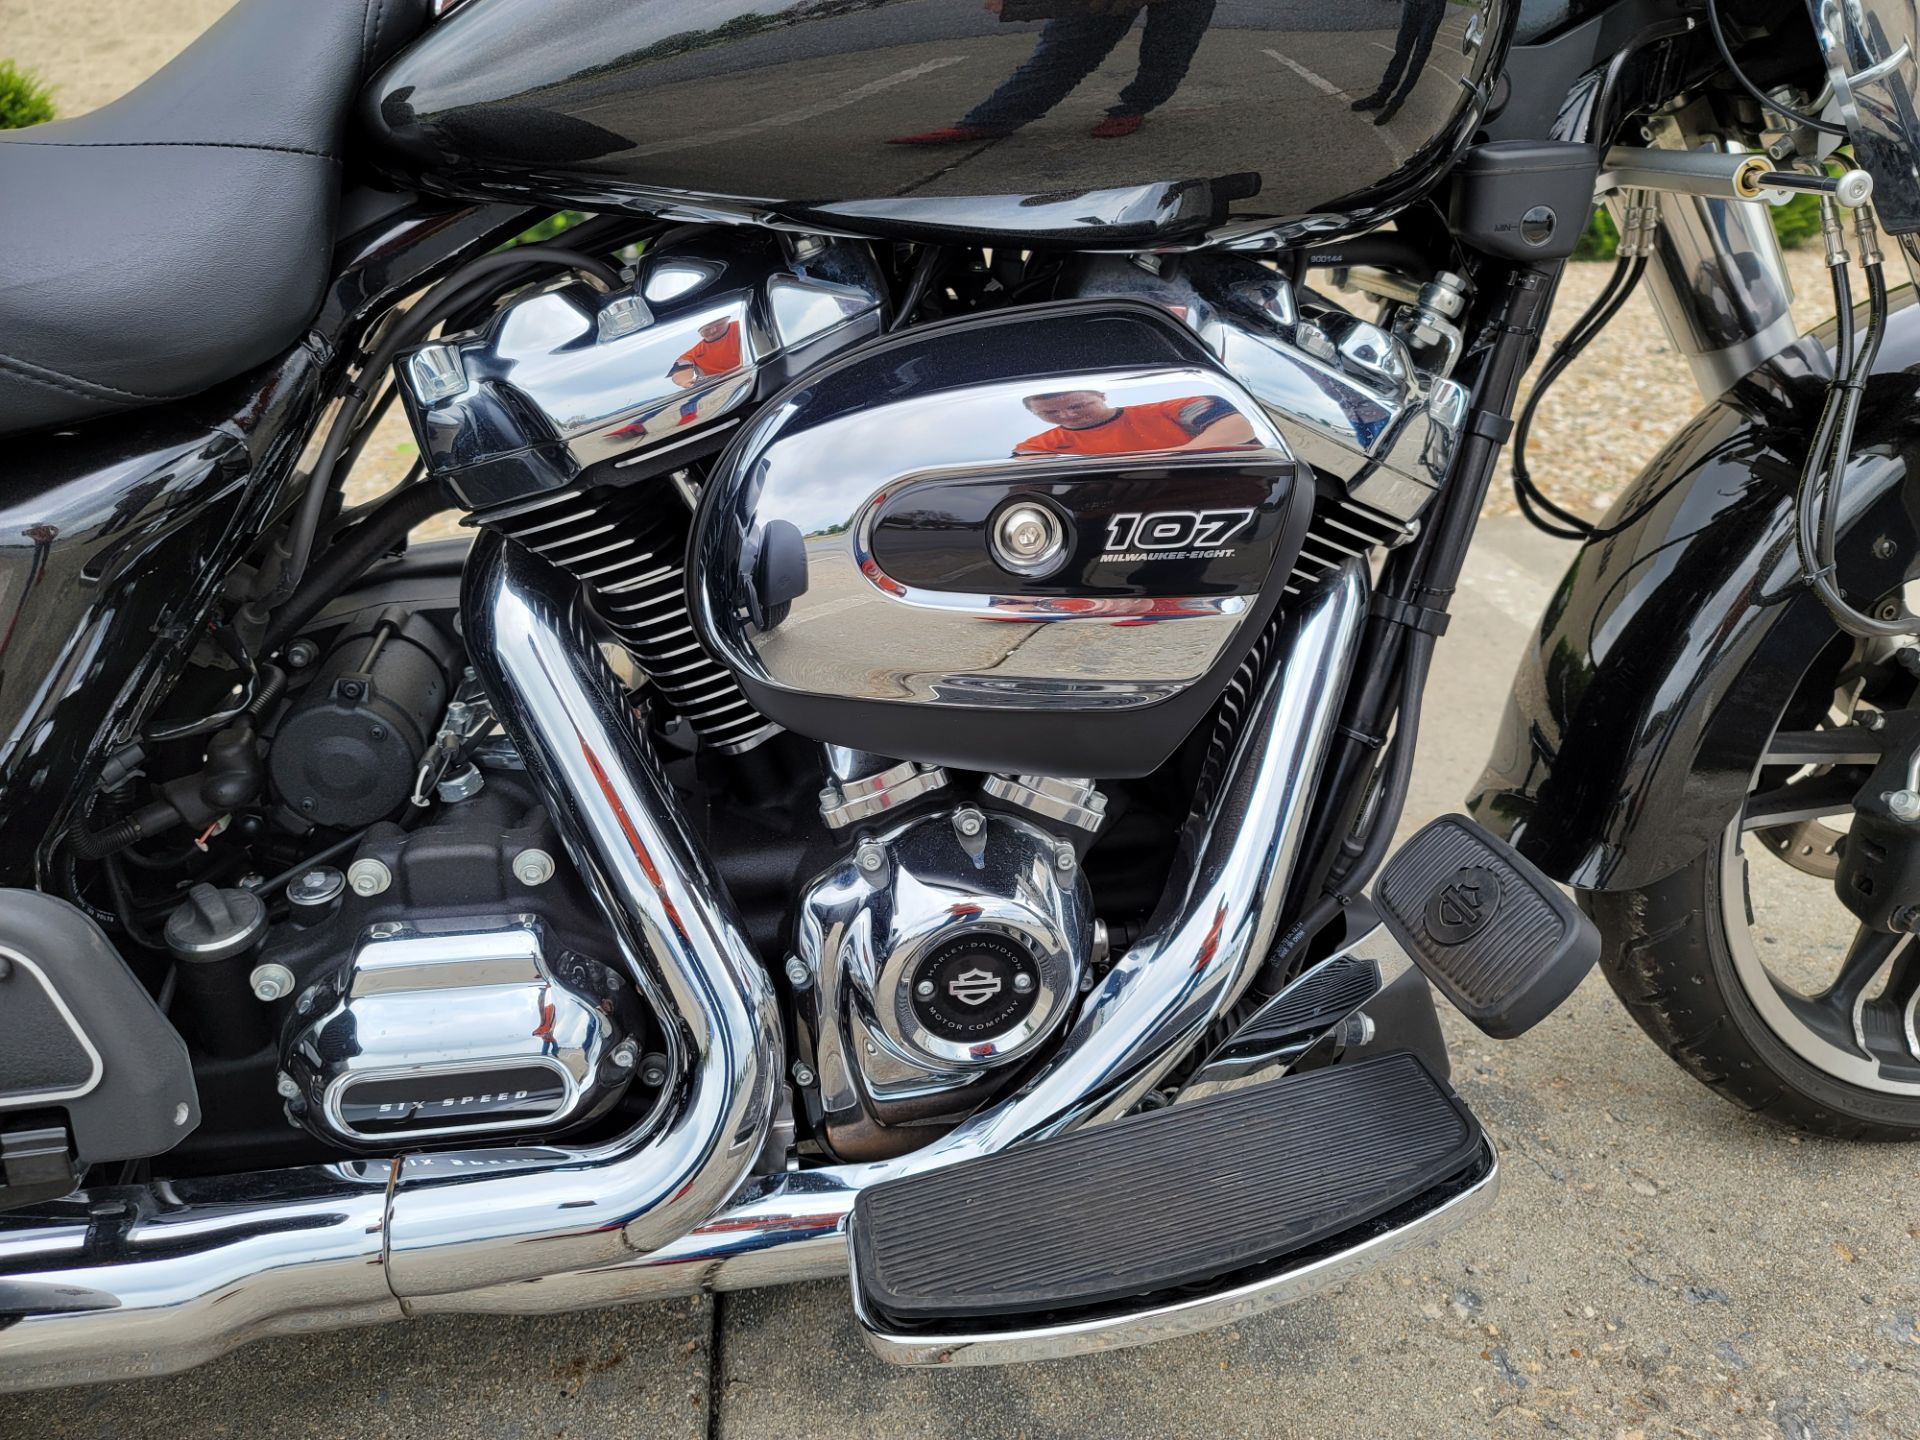 Used 2017 Harley Davidson Freewheeler Black Quartz Trikes In Rock Falls Il U860444